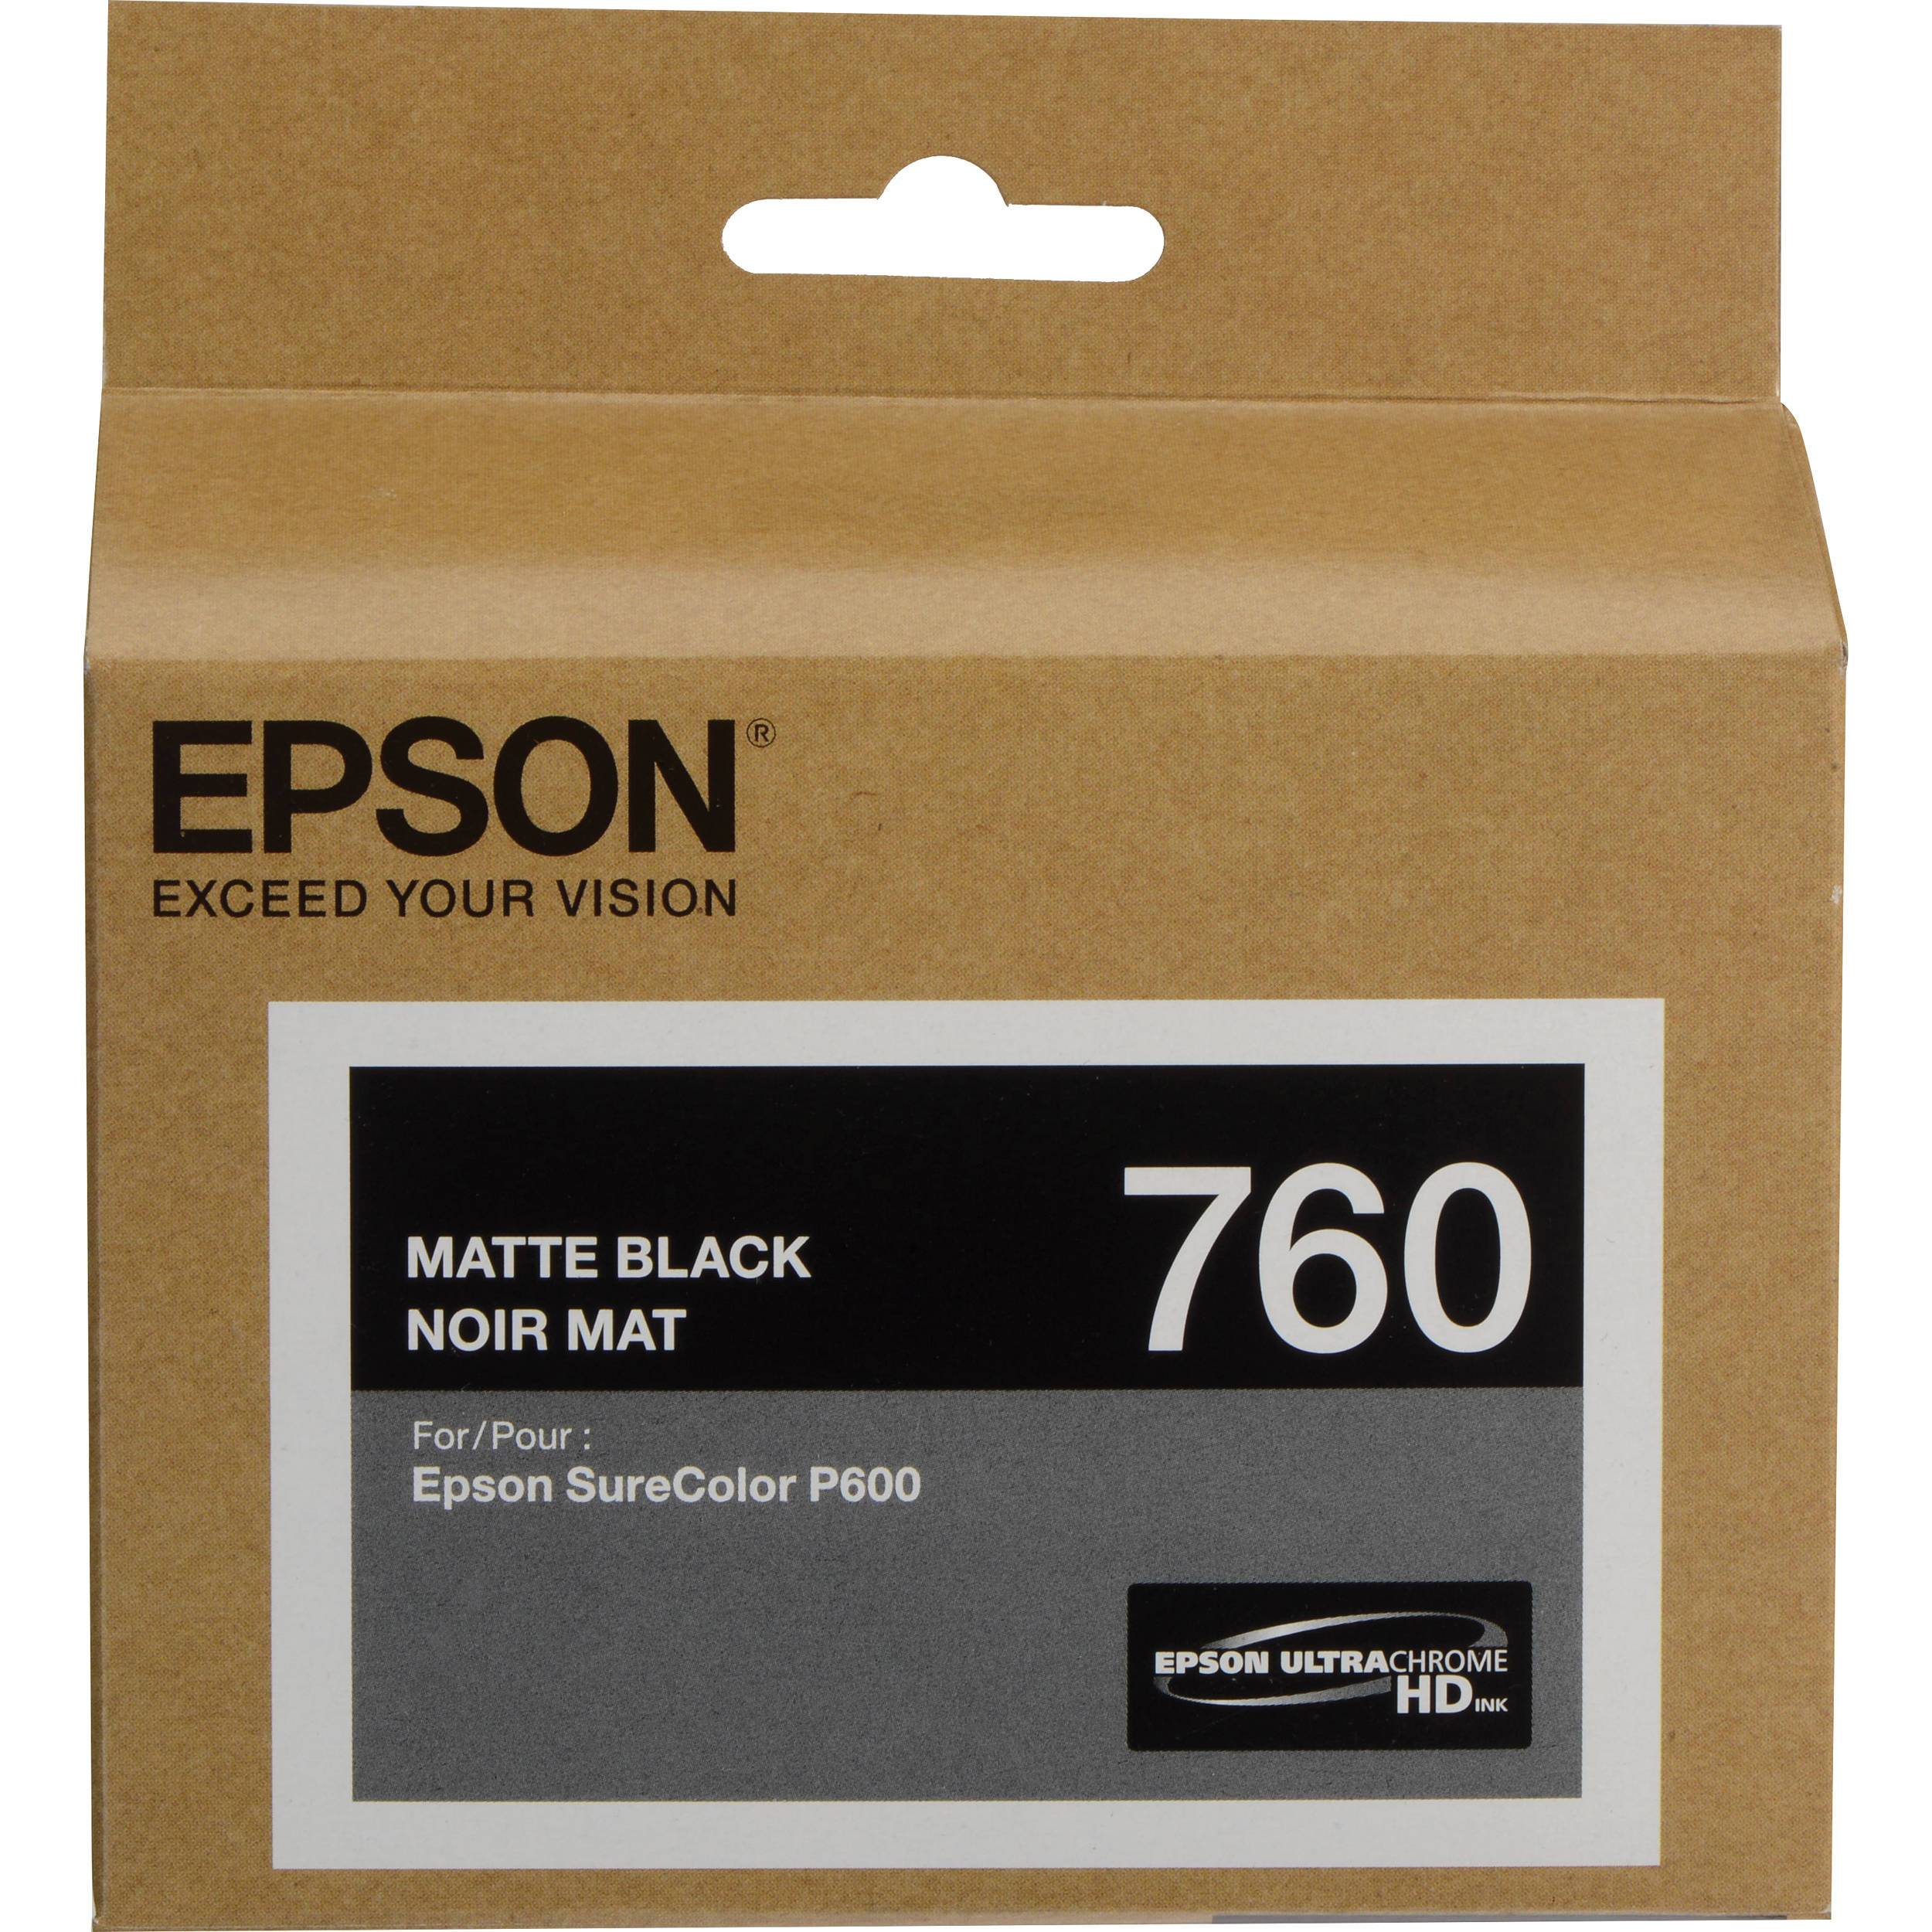 Absolute Toner T760820 EPSON ULTRACHROME HD MATTE BLACK INK 26ML, SURECOLOR Epson Ink Cartridges